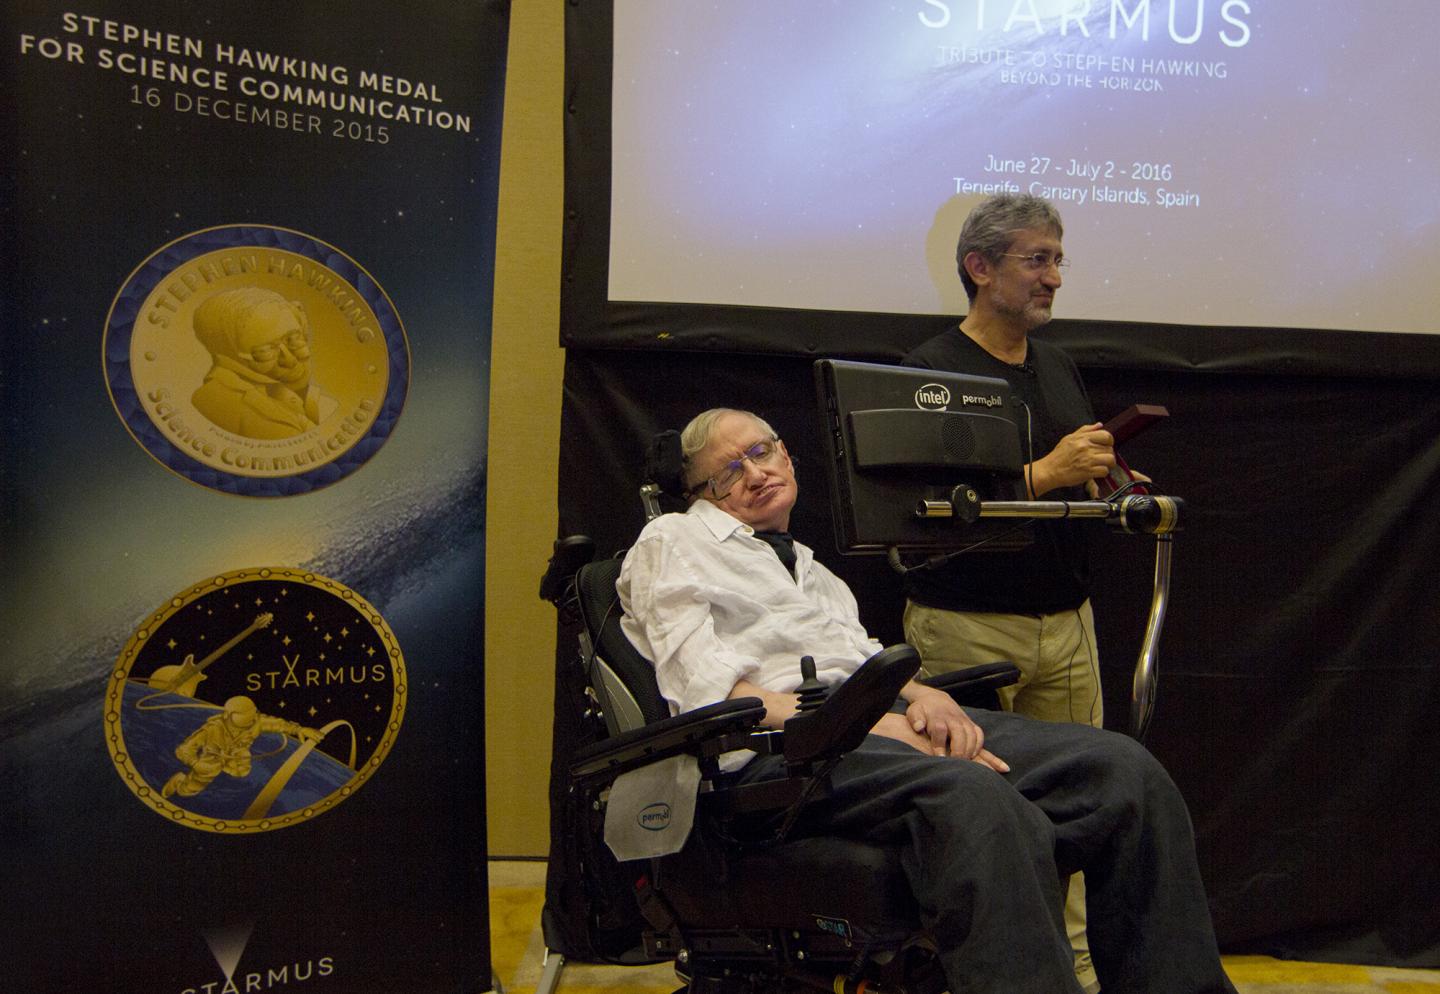 Professor Stephen Hawking at the Press Launch of STARMUS 2016